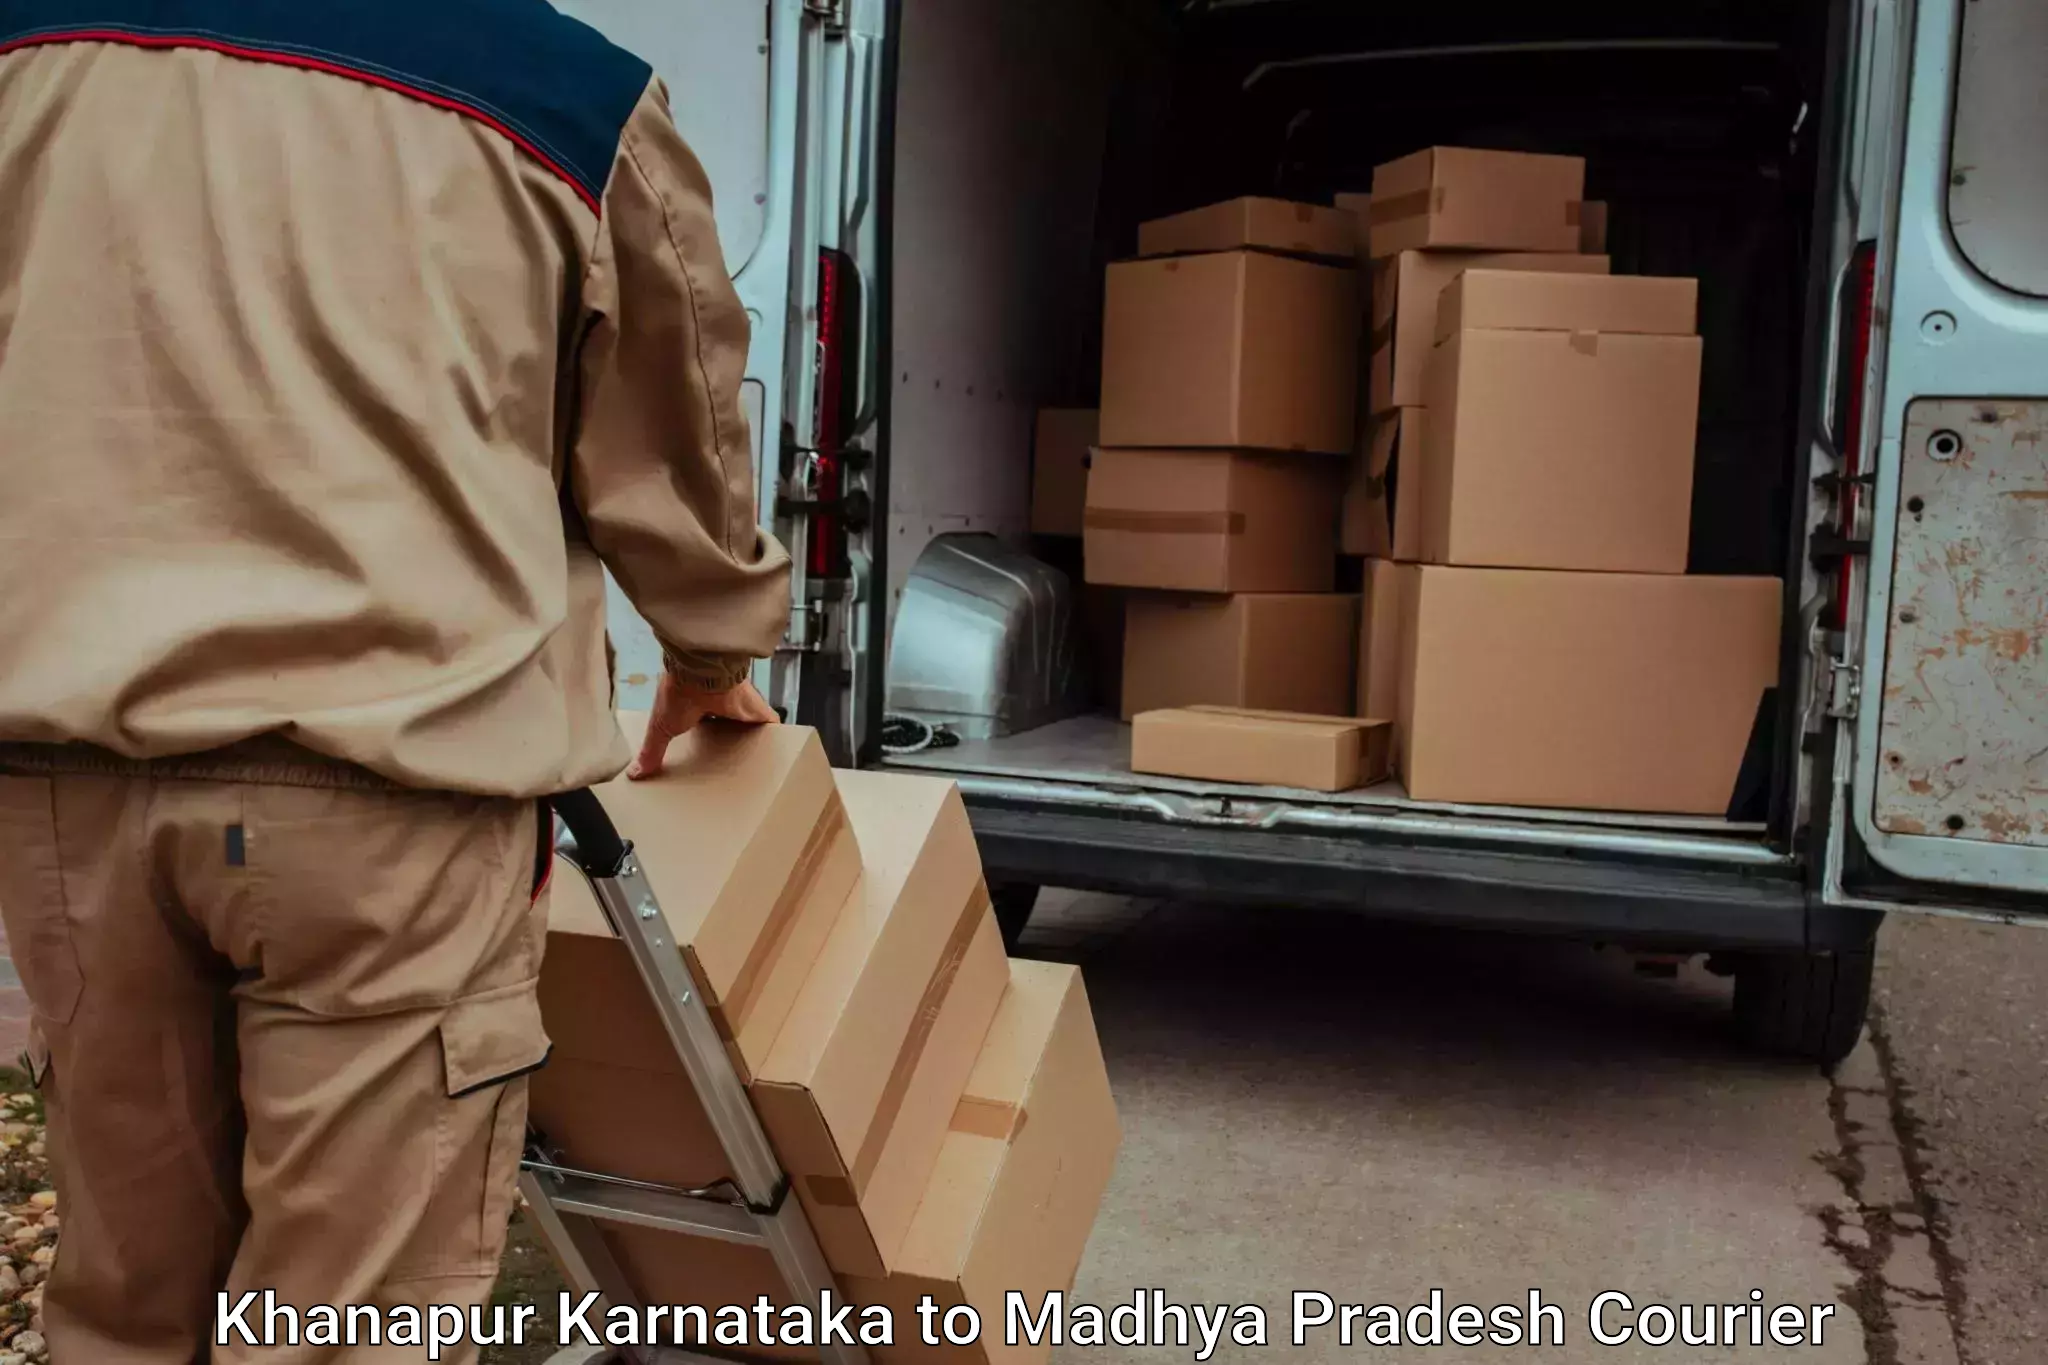 Quality relocation assistance Khanapur Karnataka to Chand Chaurai